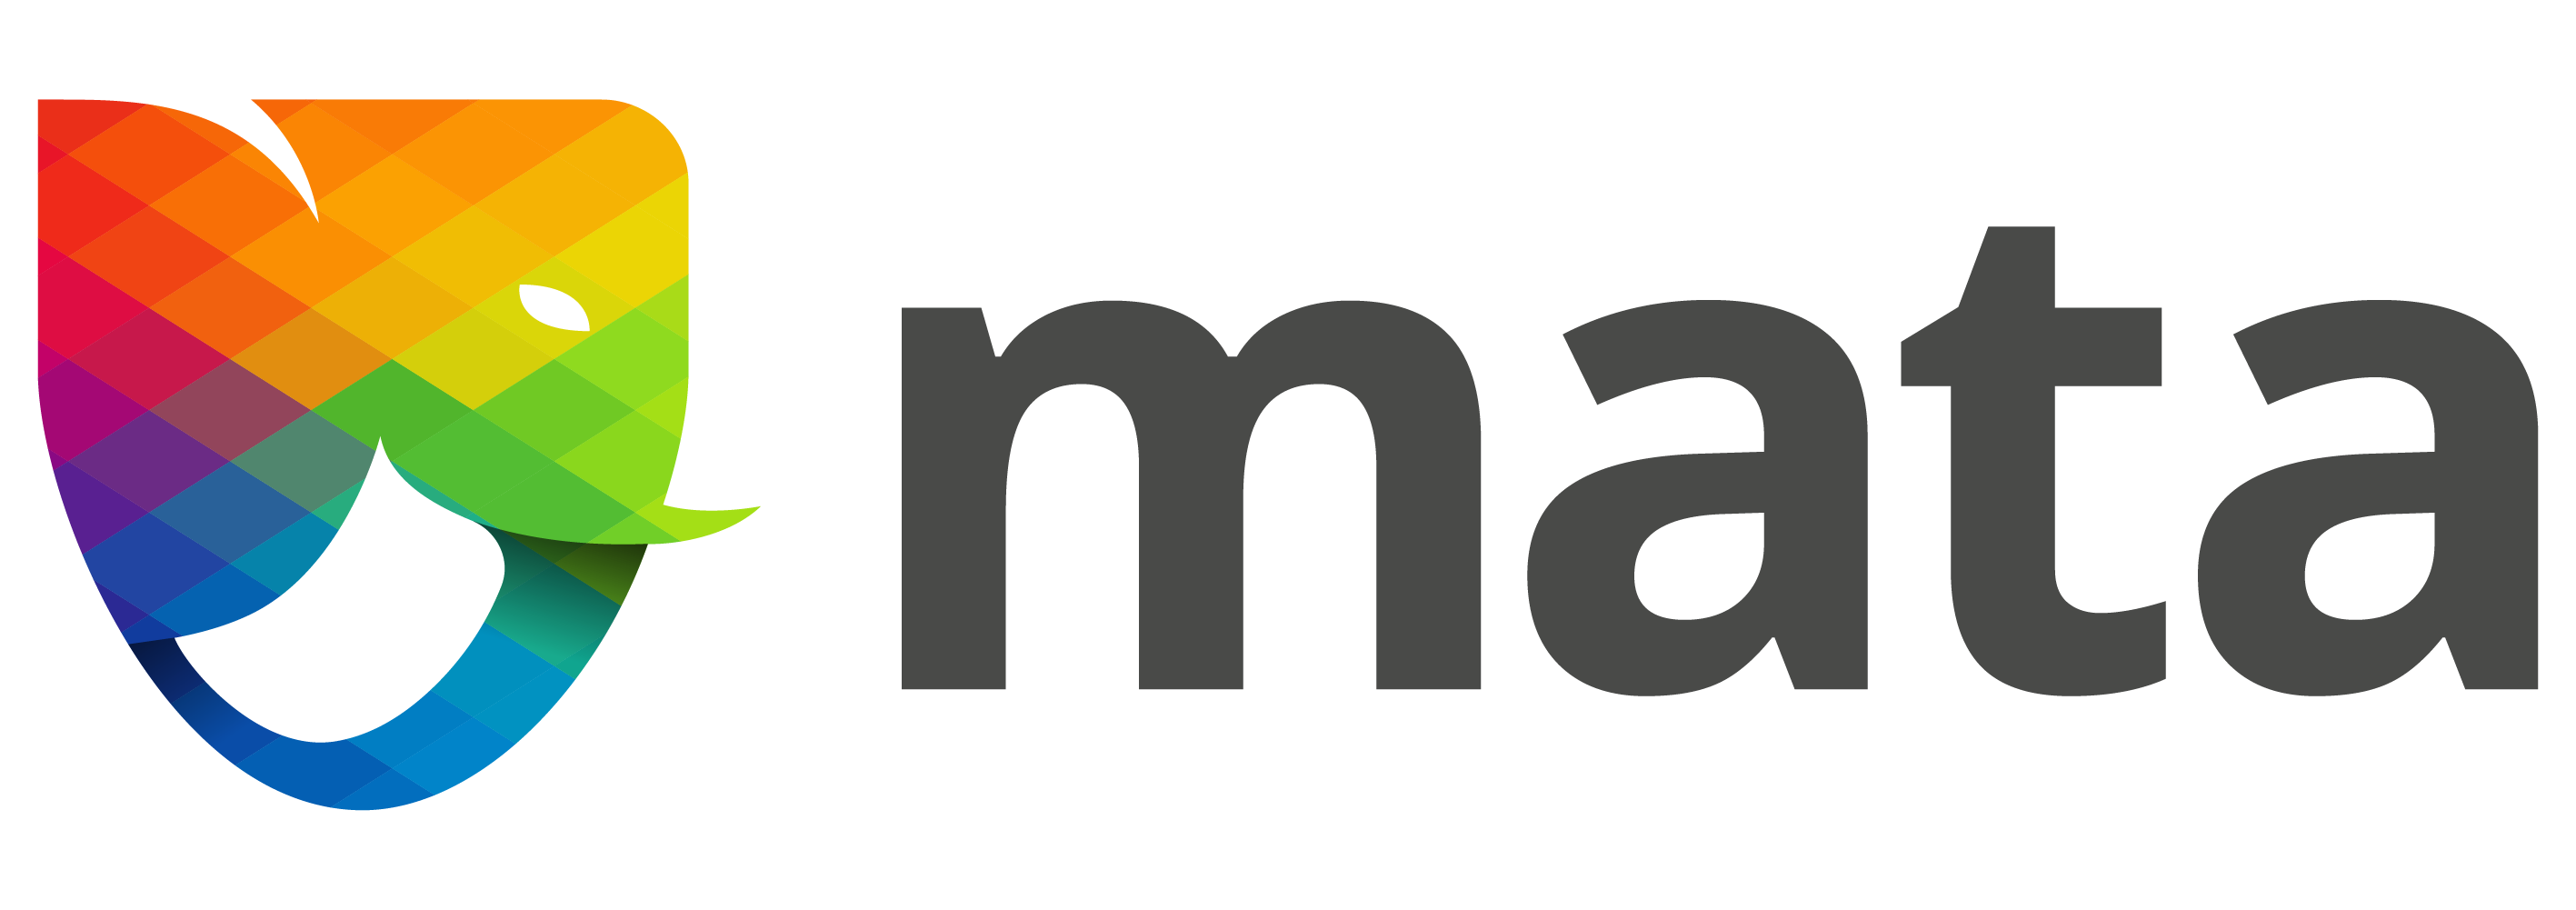 logo editeur mata nouveau 2021